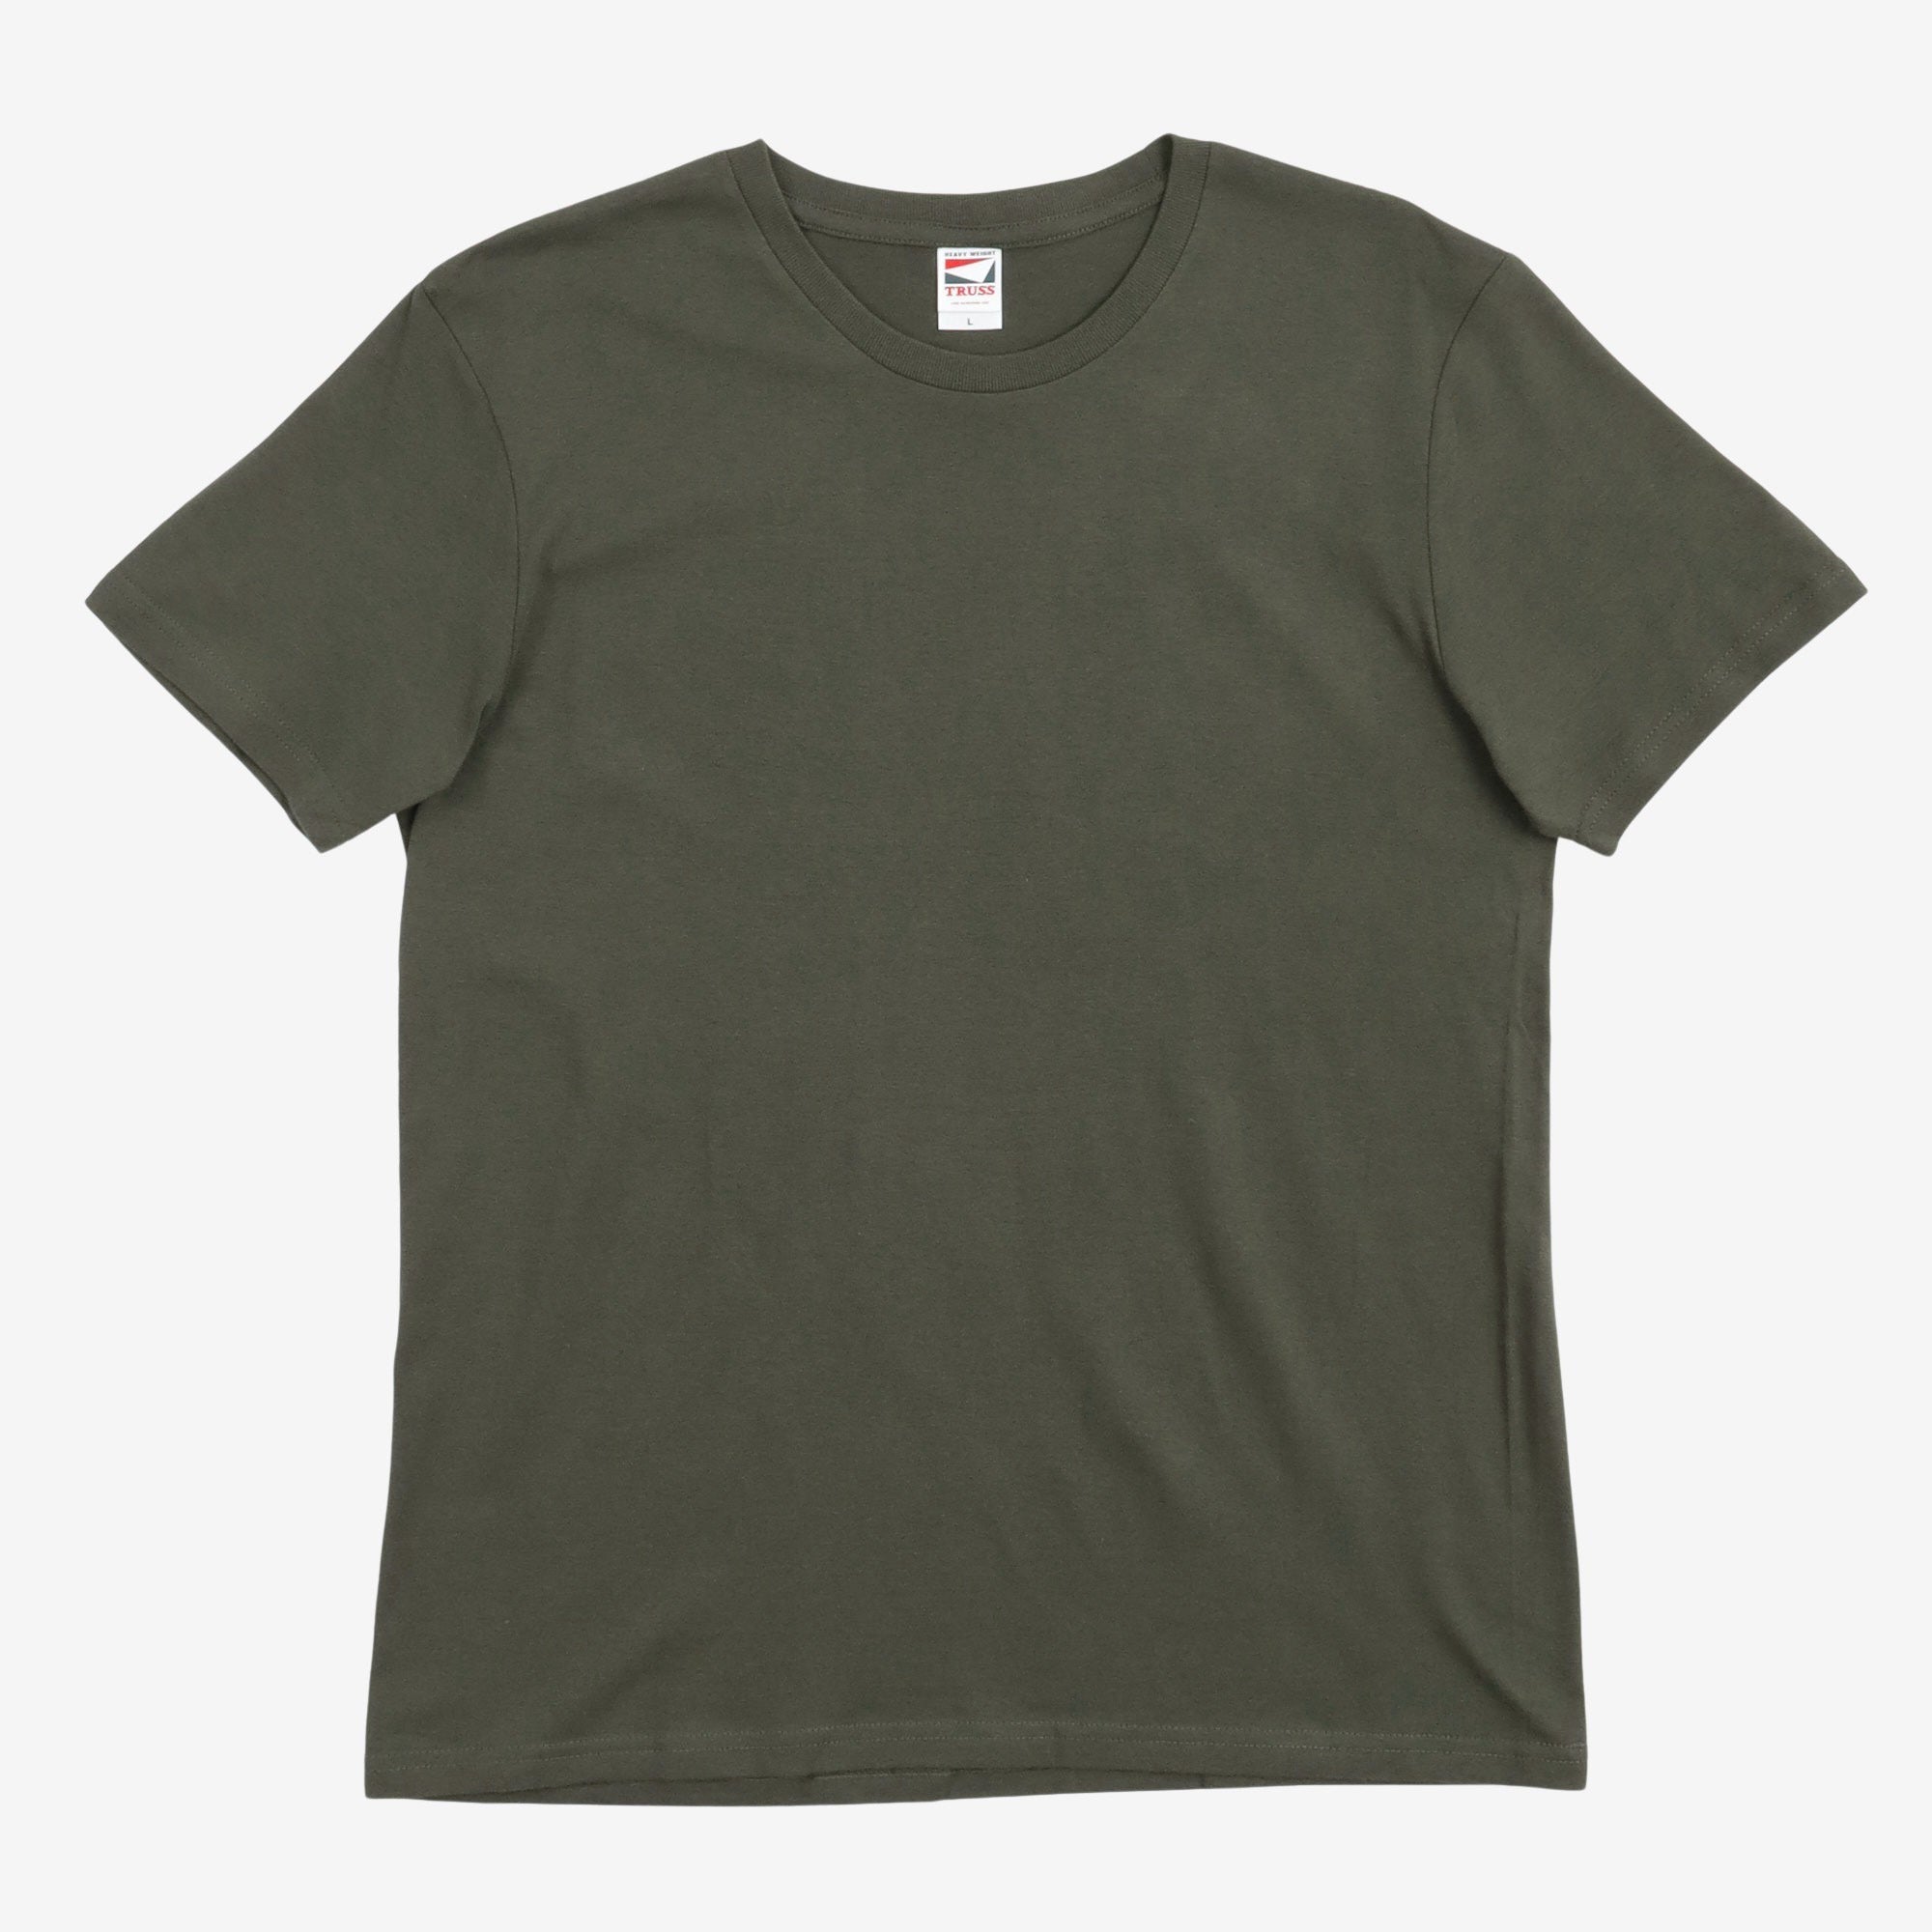 Cotton T-Shirt - Army